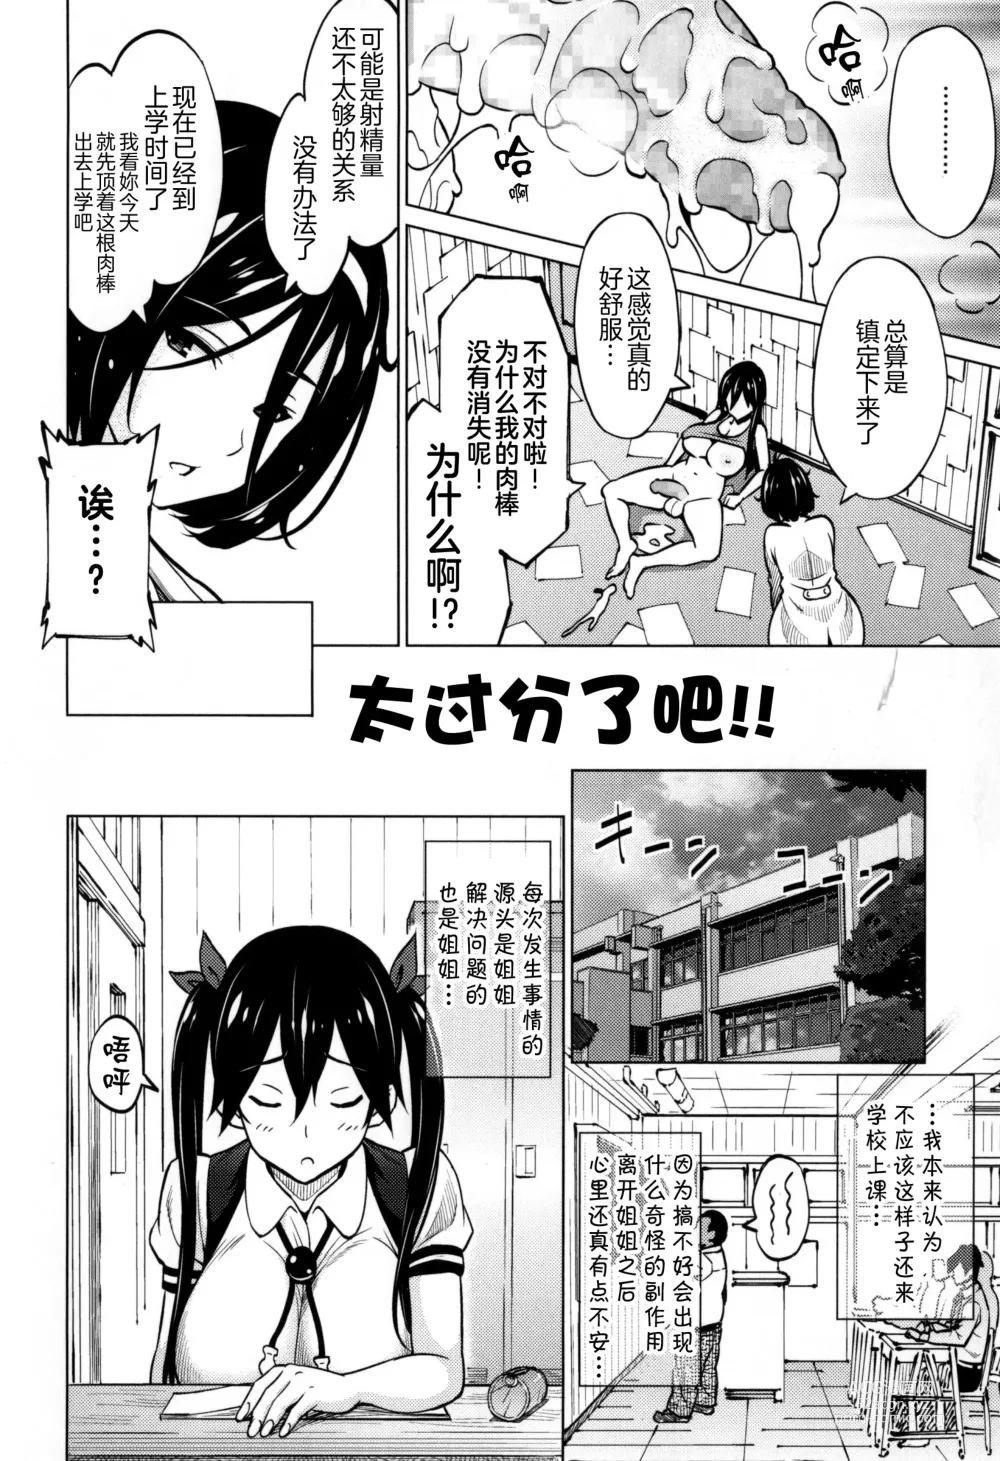 Page 191 of manga Photorare SEX & photograph